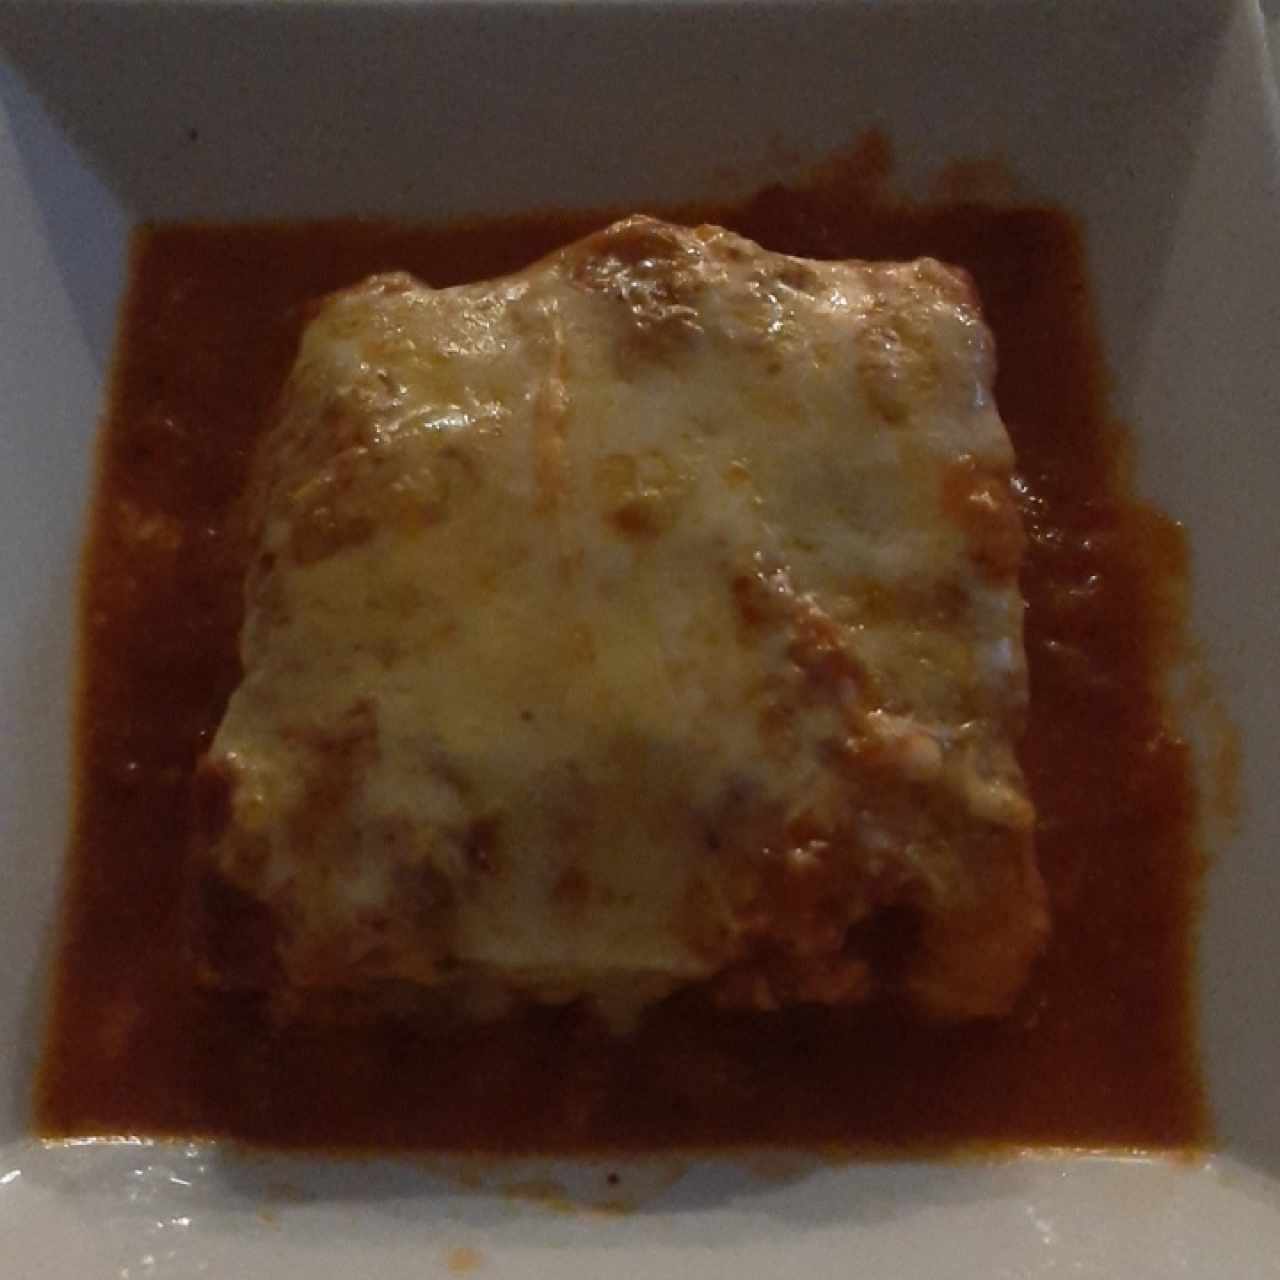 Lasagnas - Lasagna gratinada